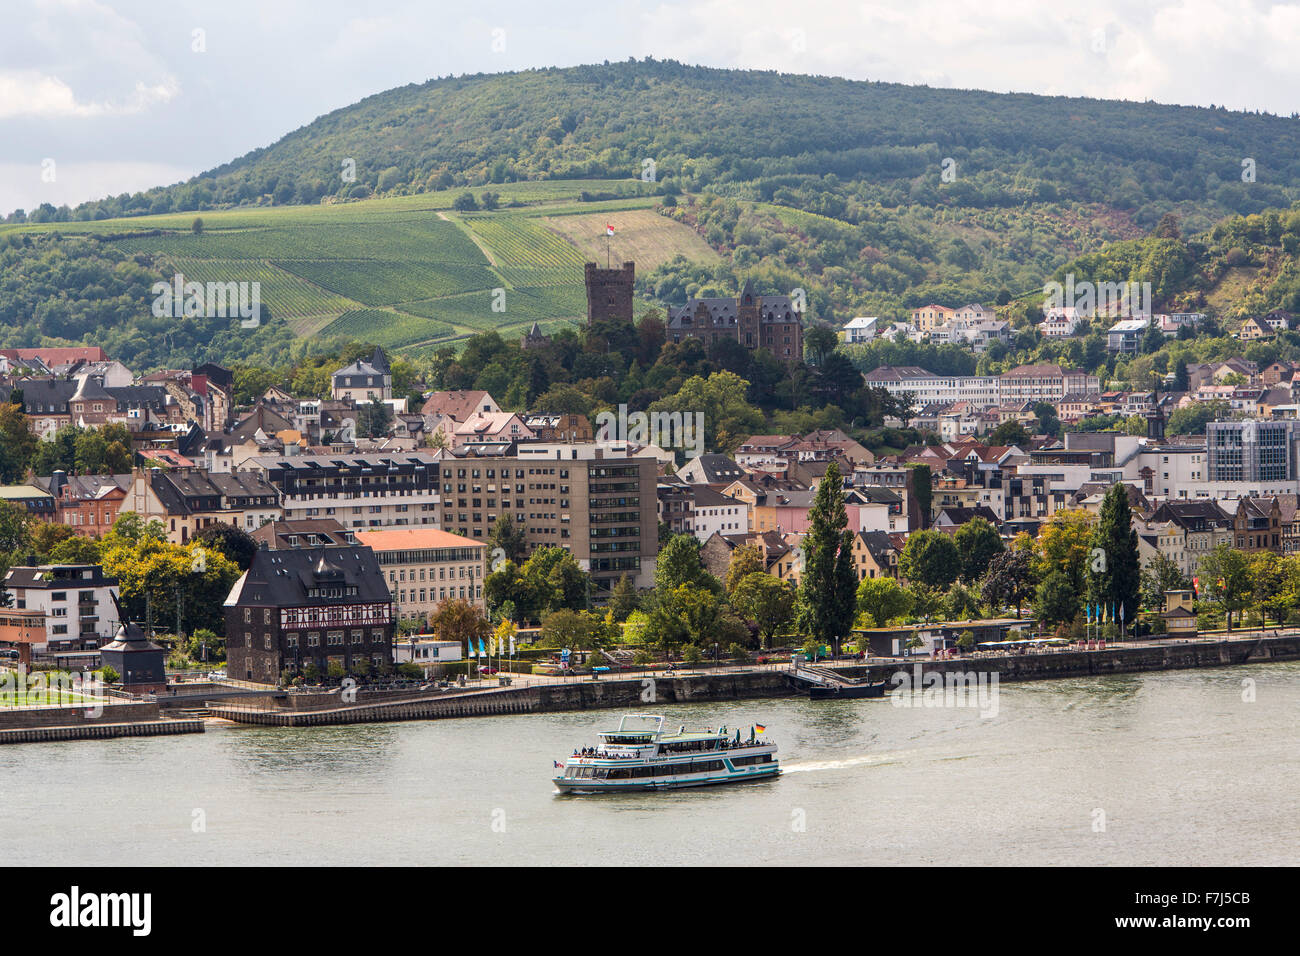 City of Bingen, upper middle Rhine valley, Germany Stock Photo